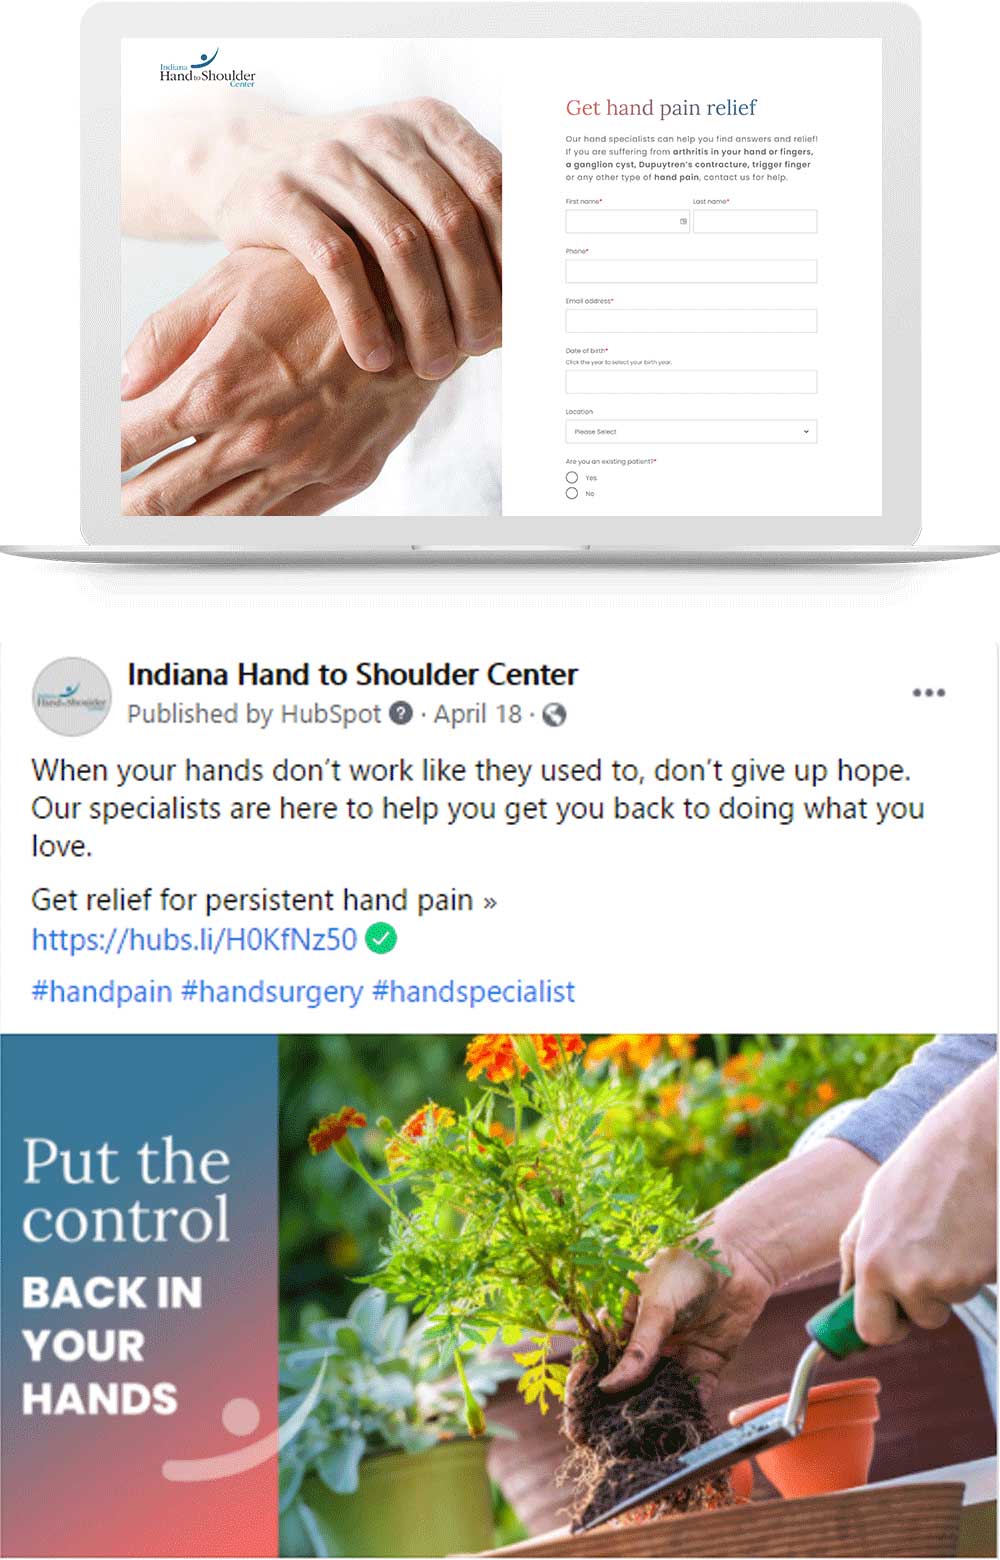 Indiana Hand to Shoulder Center Marketing Service Line Campaign Award Winner